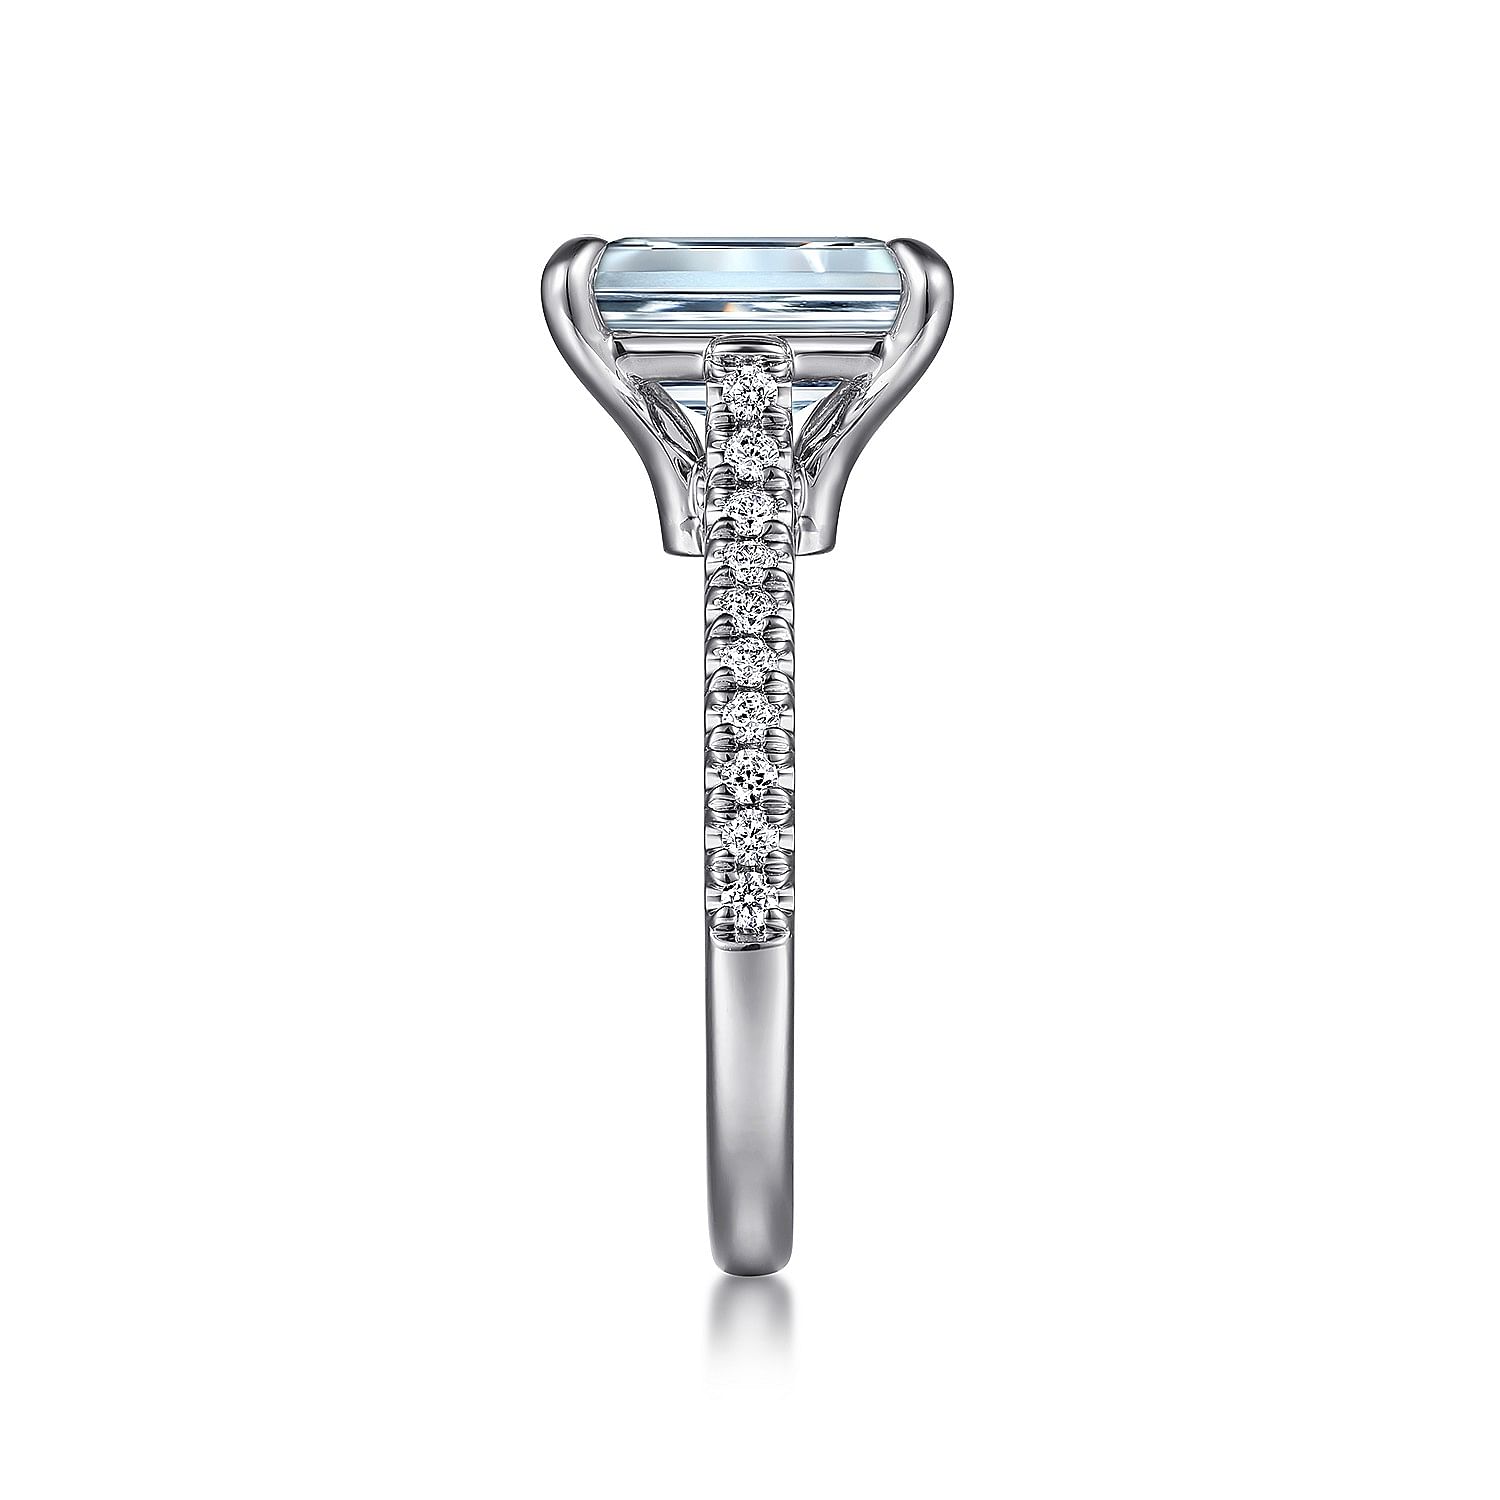 14K White Gold Emerald Cut Aquamarine and Diamond Engagement Ring